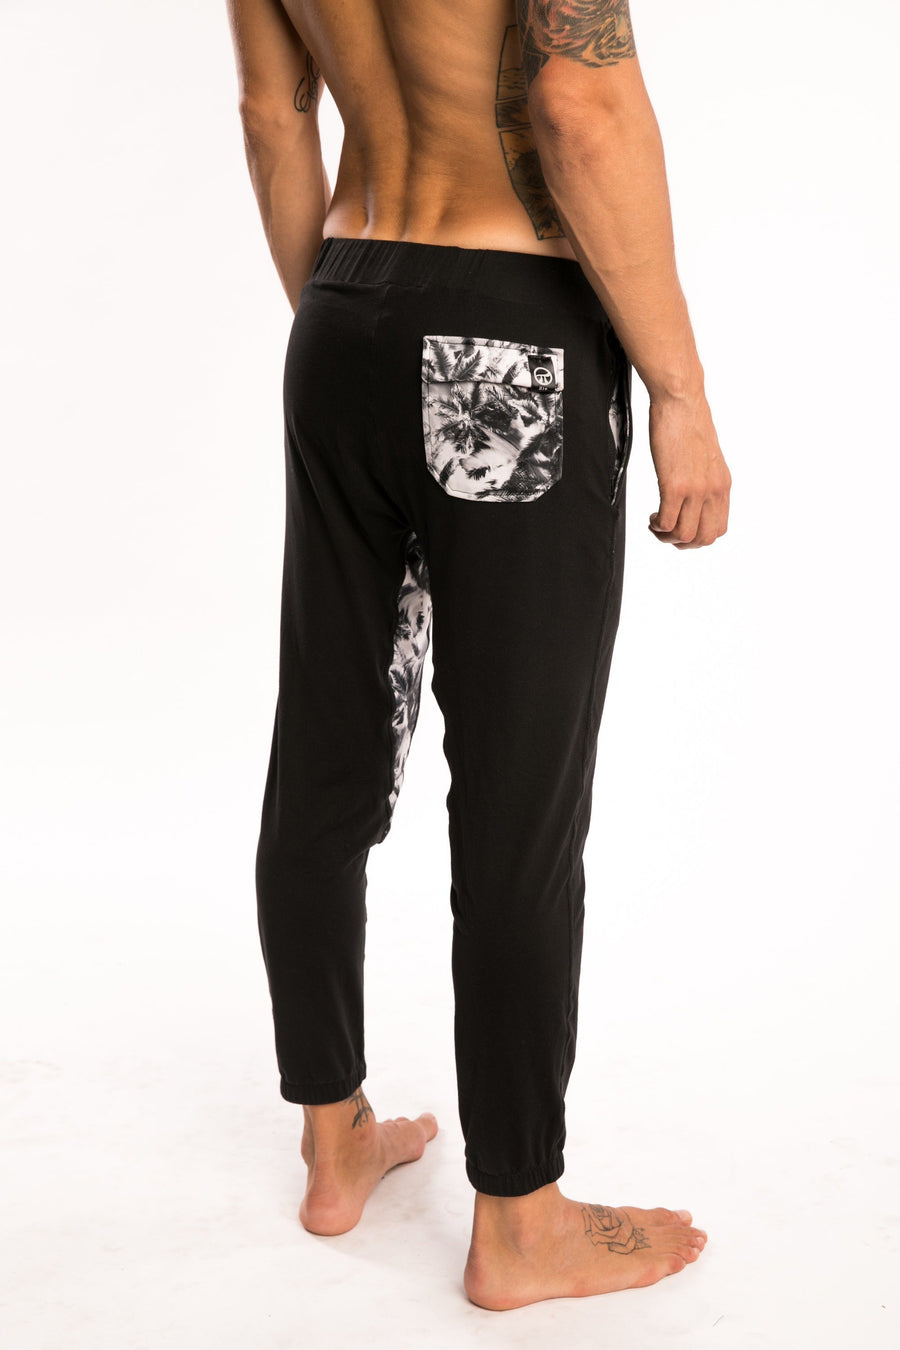 BOARDWALK Ninja Pants-PANTS-Pi Movement-Pi Movement